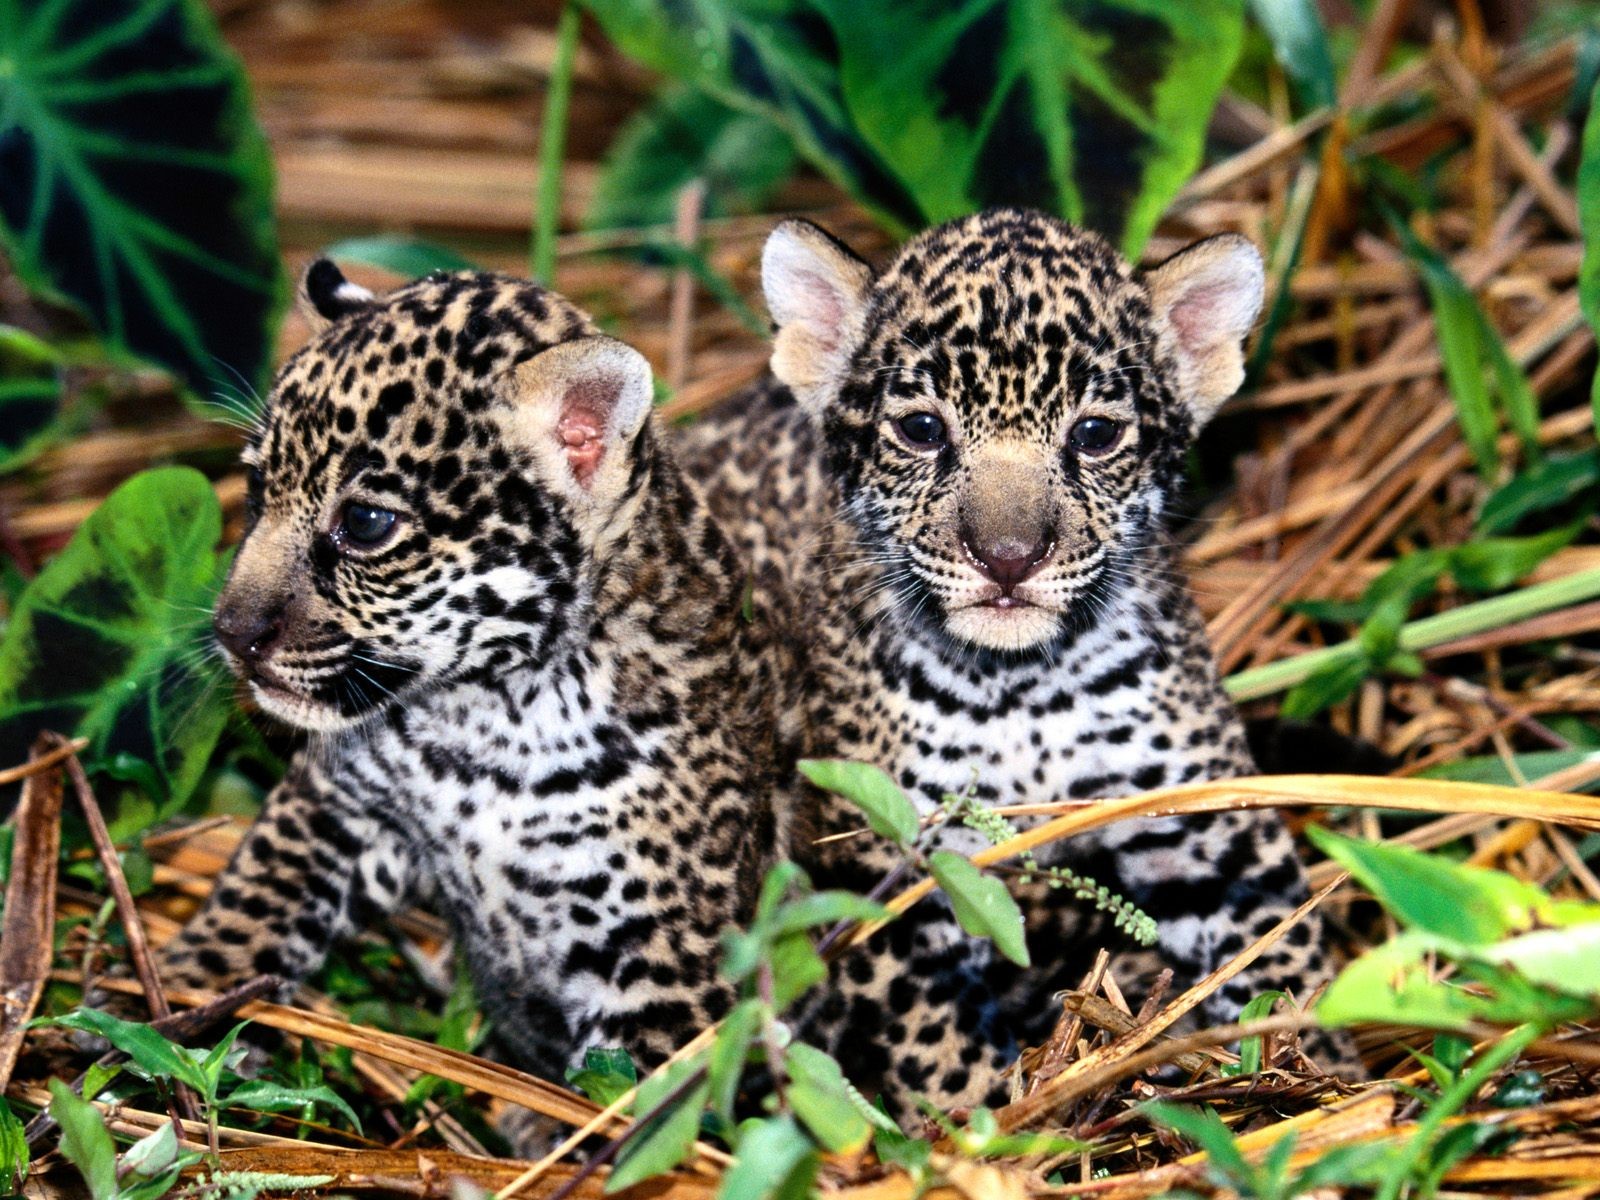 baby jaguars animals